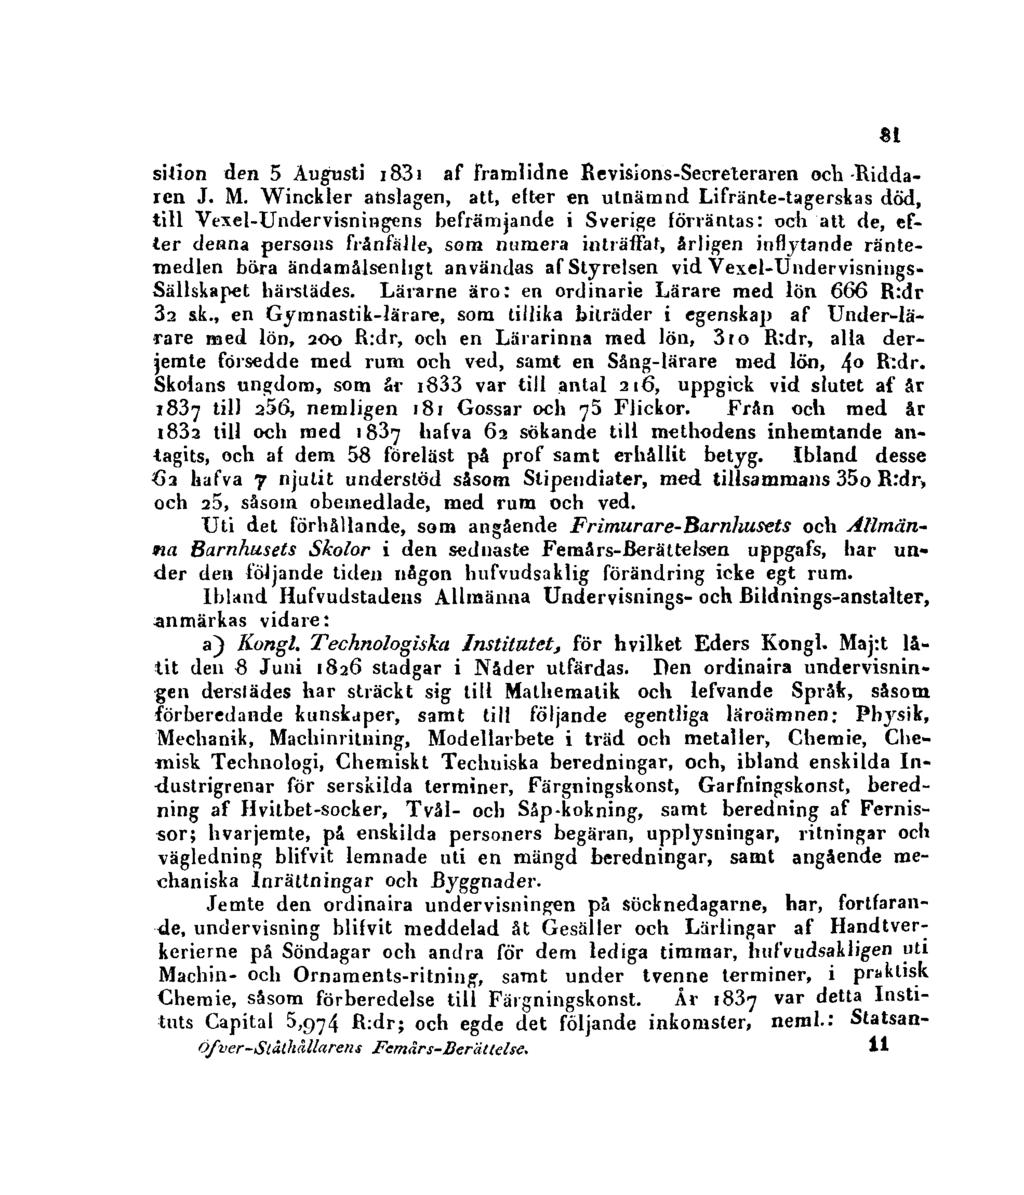 sition den 5 Augusti 1831 af Framlidne Revisions-Secreteraren och Riddaren J. M.